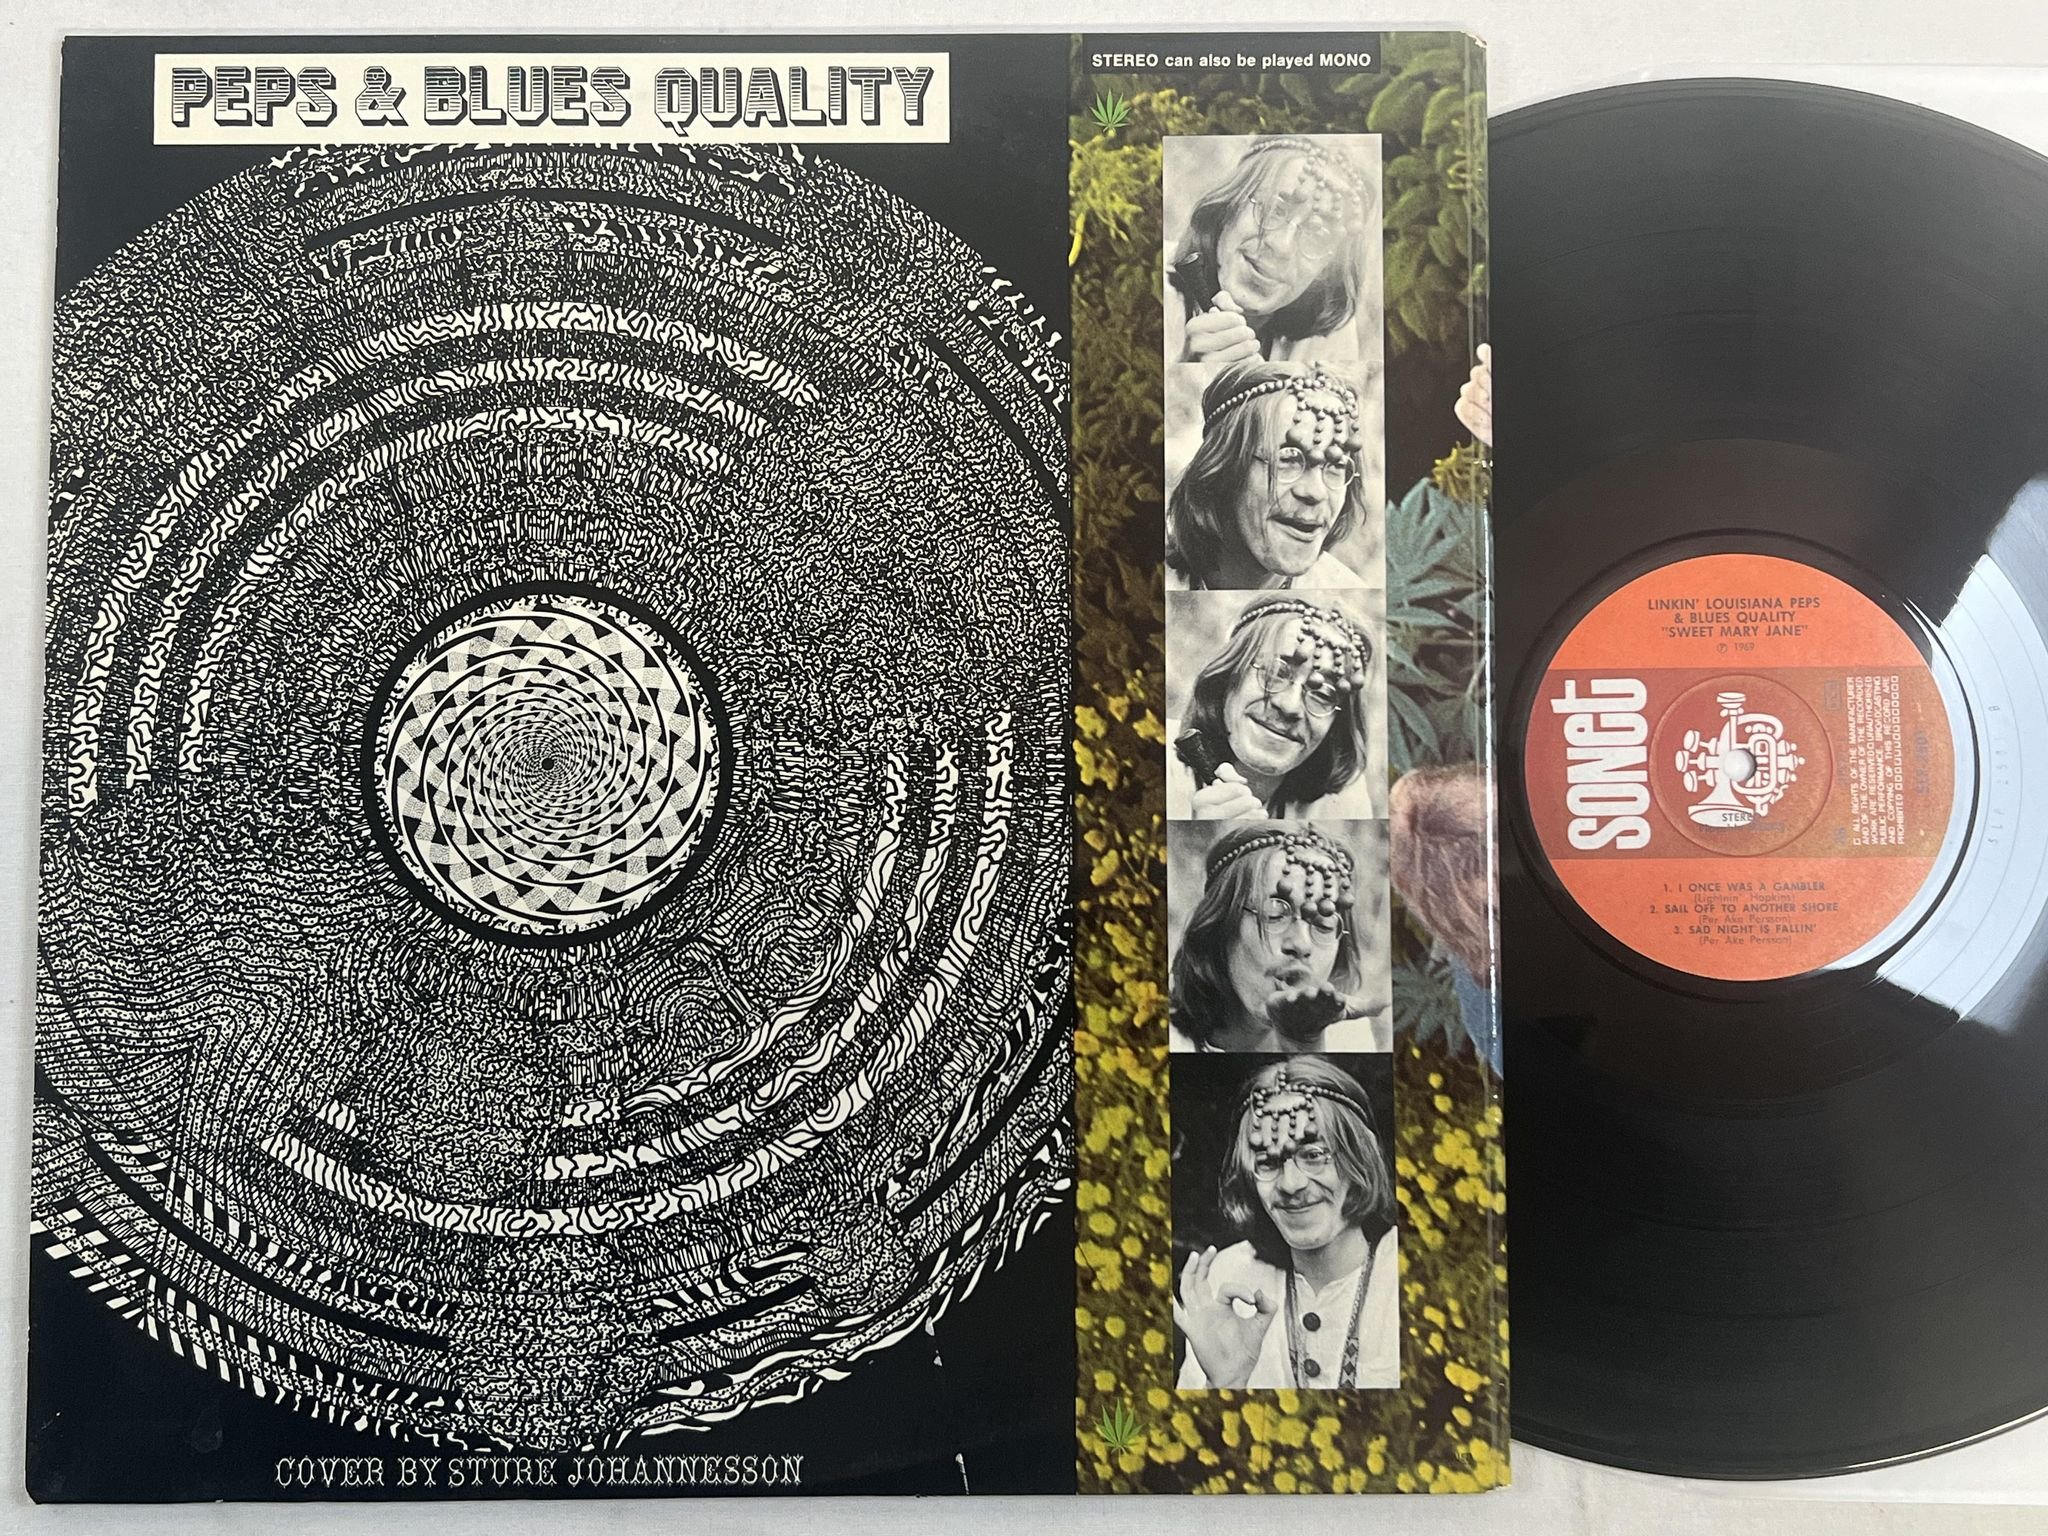 Omslagsbild för skivan PEPS & BLUES QUALITY sweet Mary Jane LP -69 Swe SONET SLP 2501 ** CLASSIC **